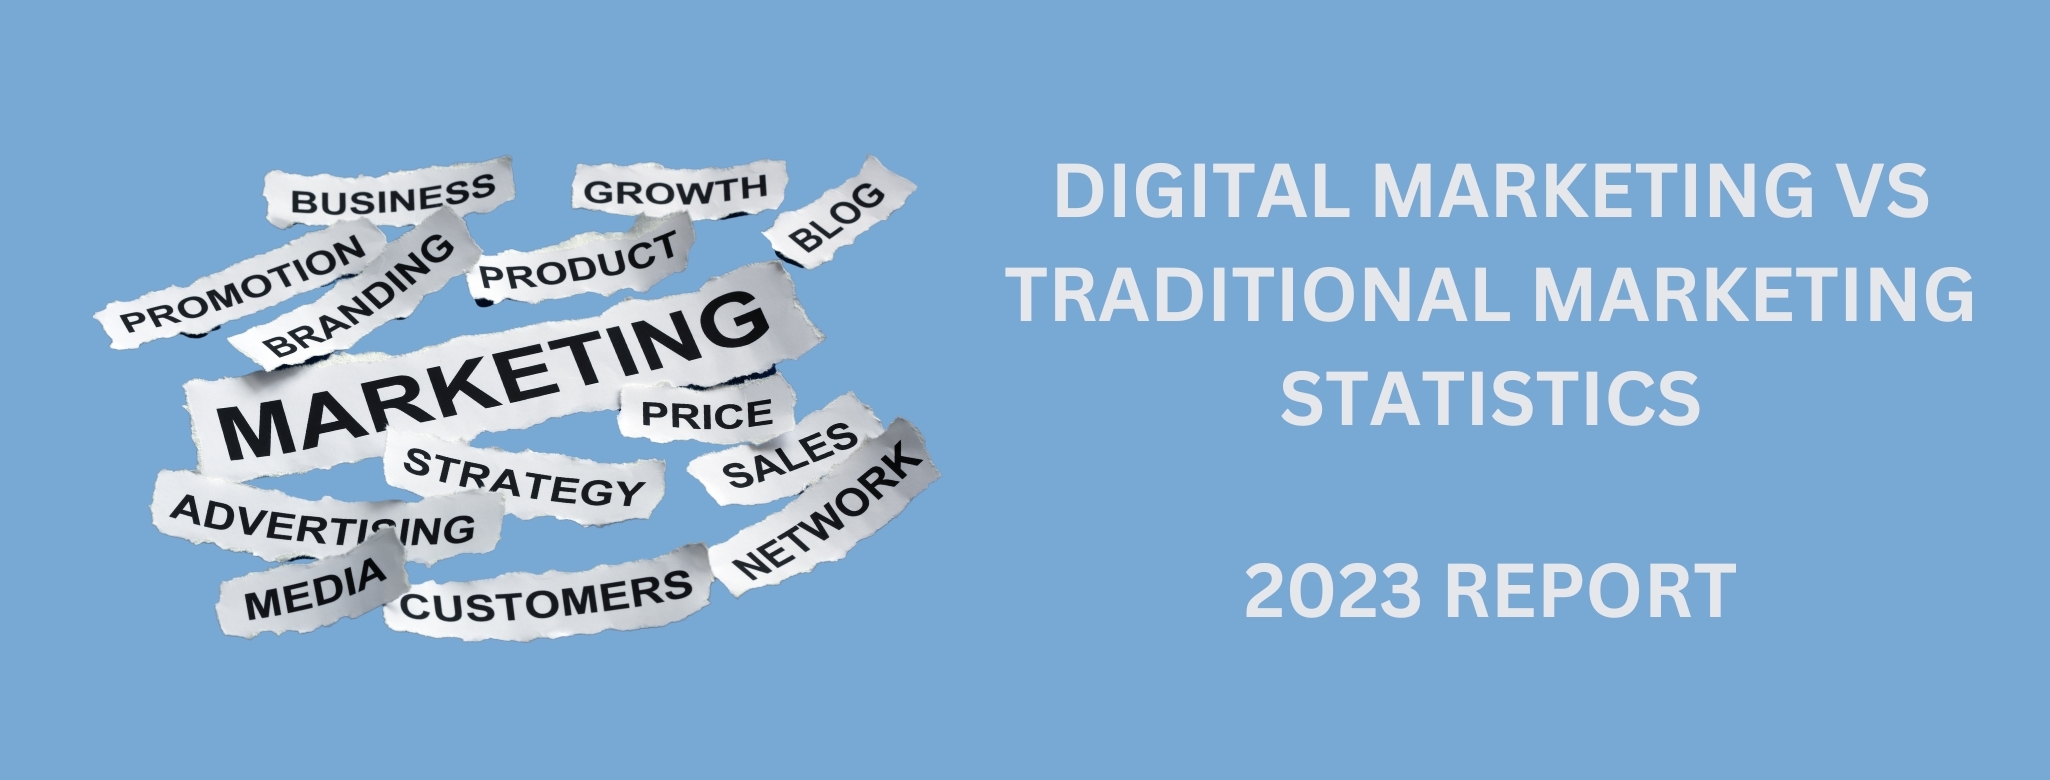 digital marketing vs traditional marketing statistics